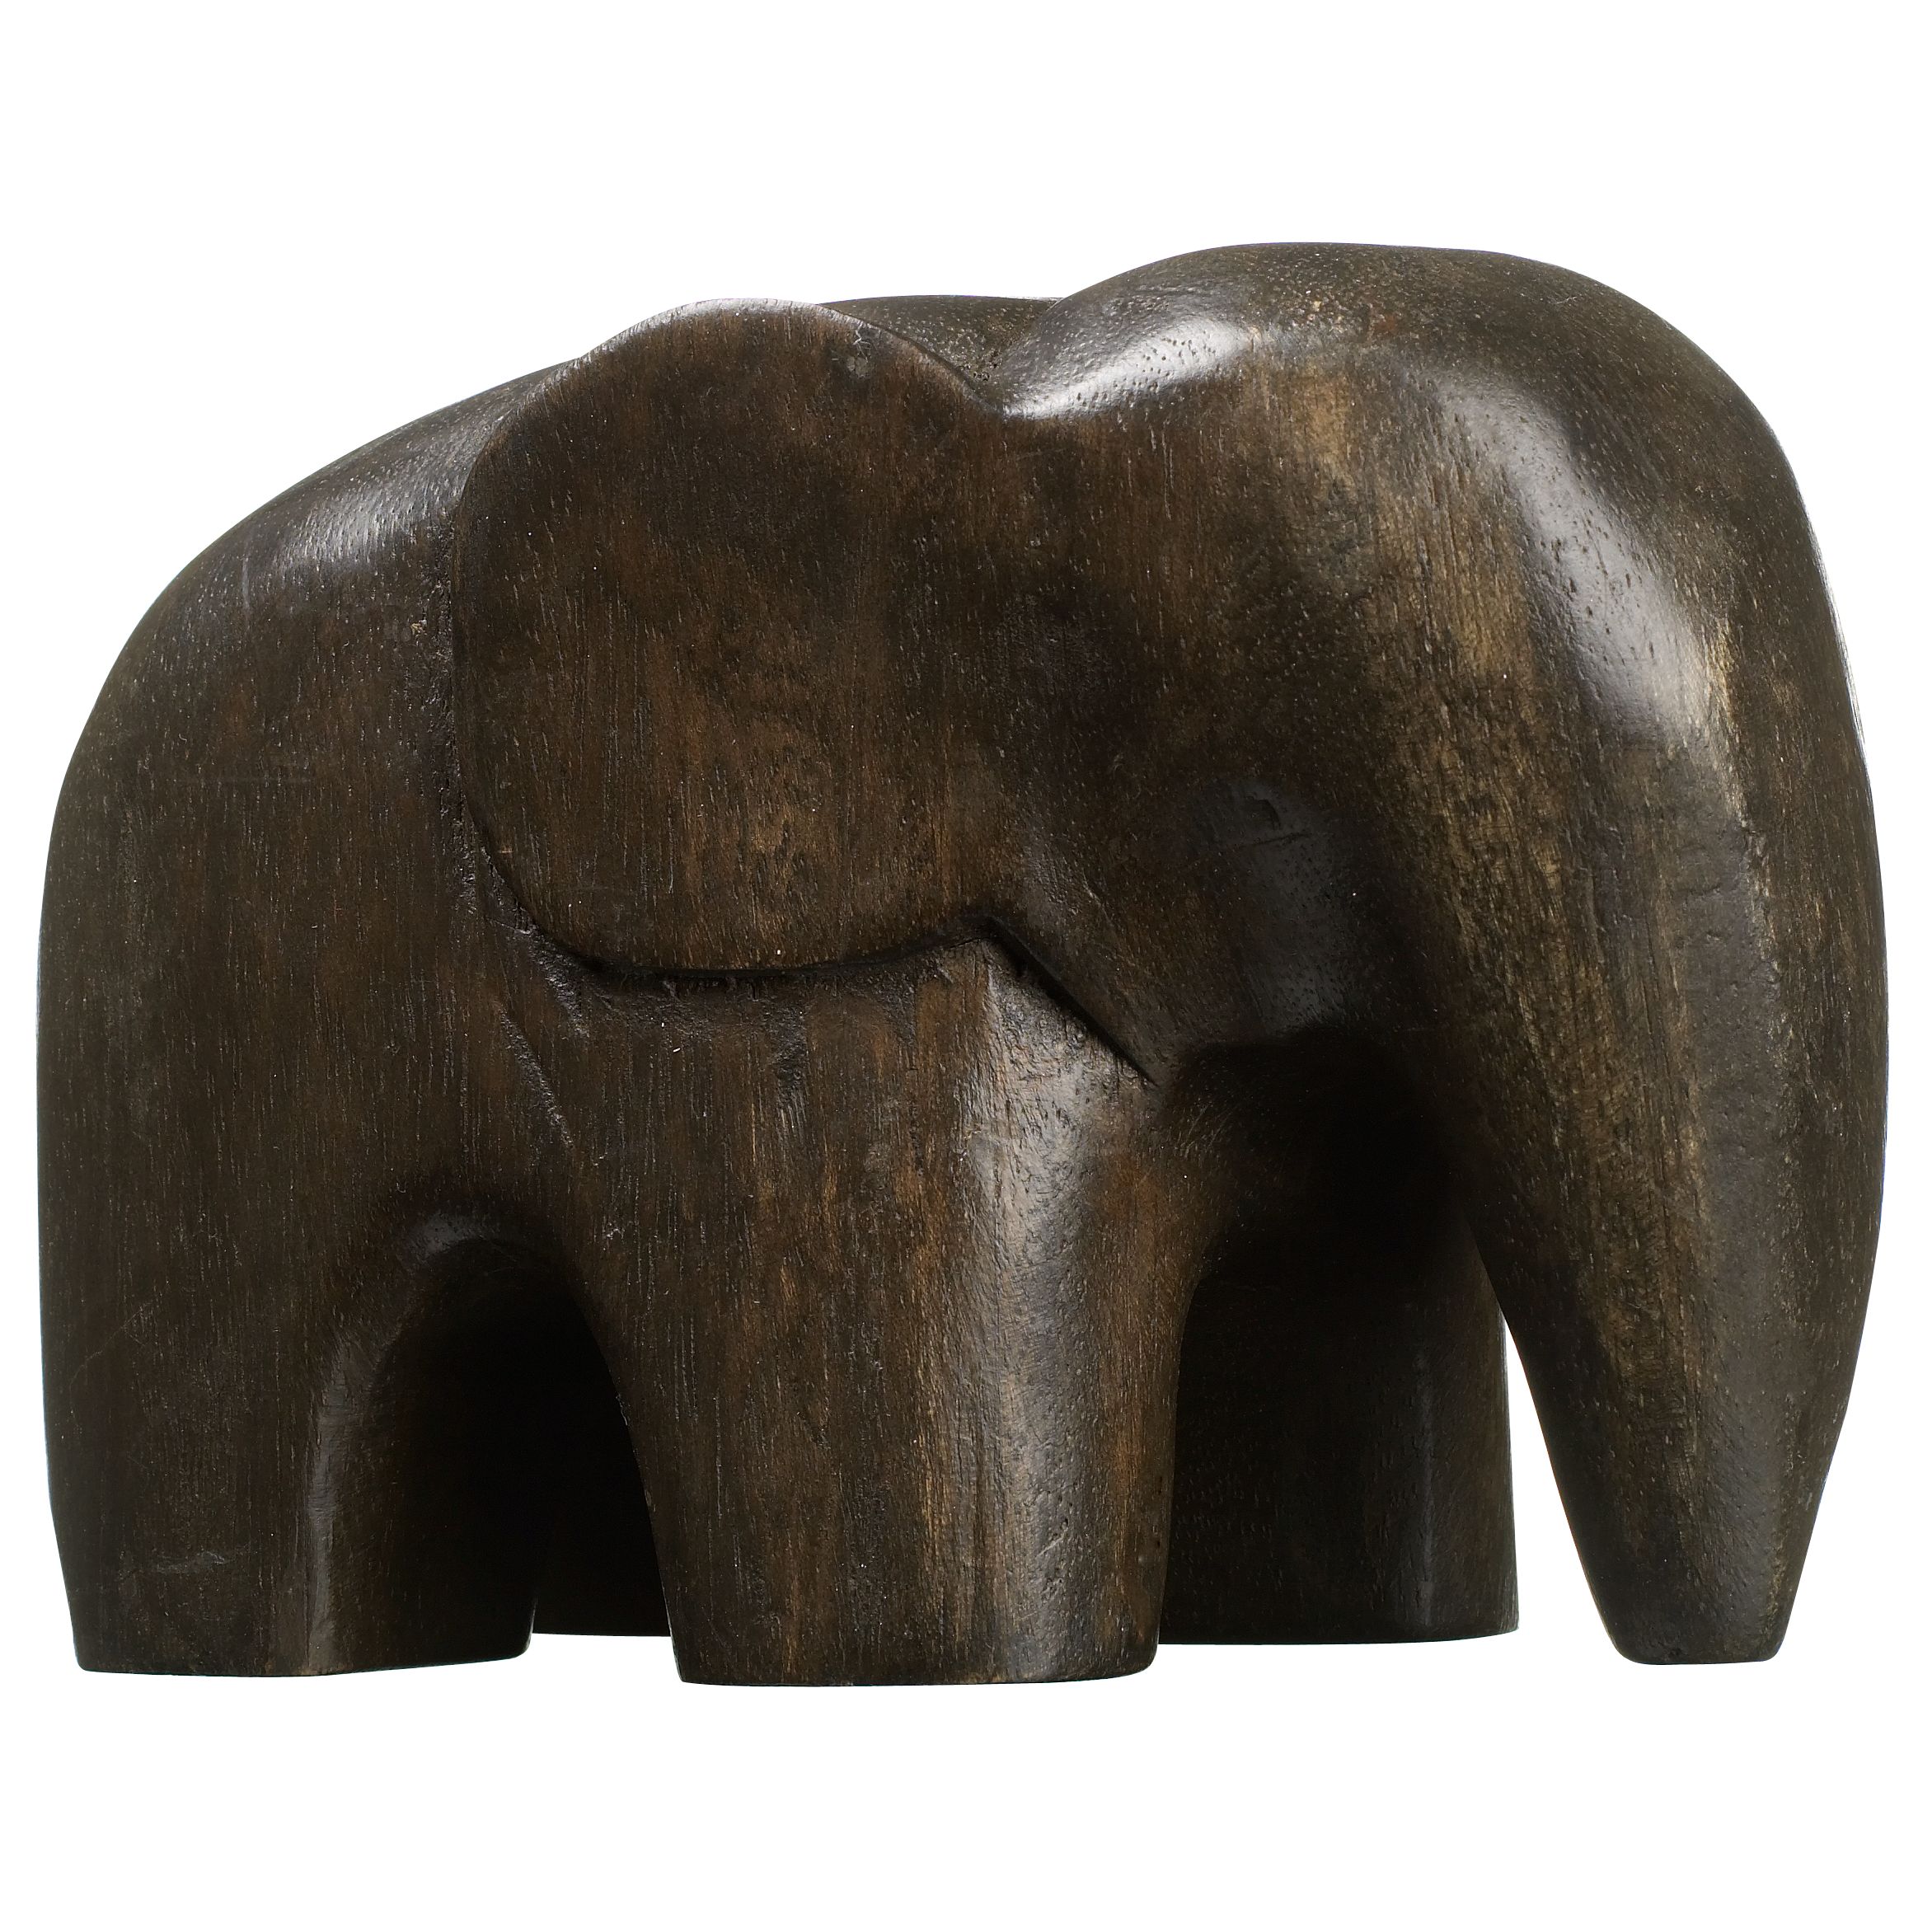 Wooden Elephant Sculpture, Small